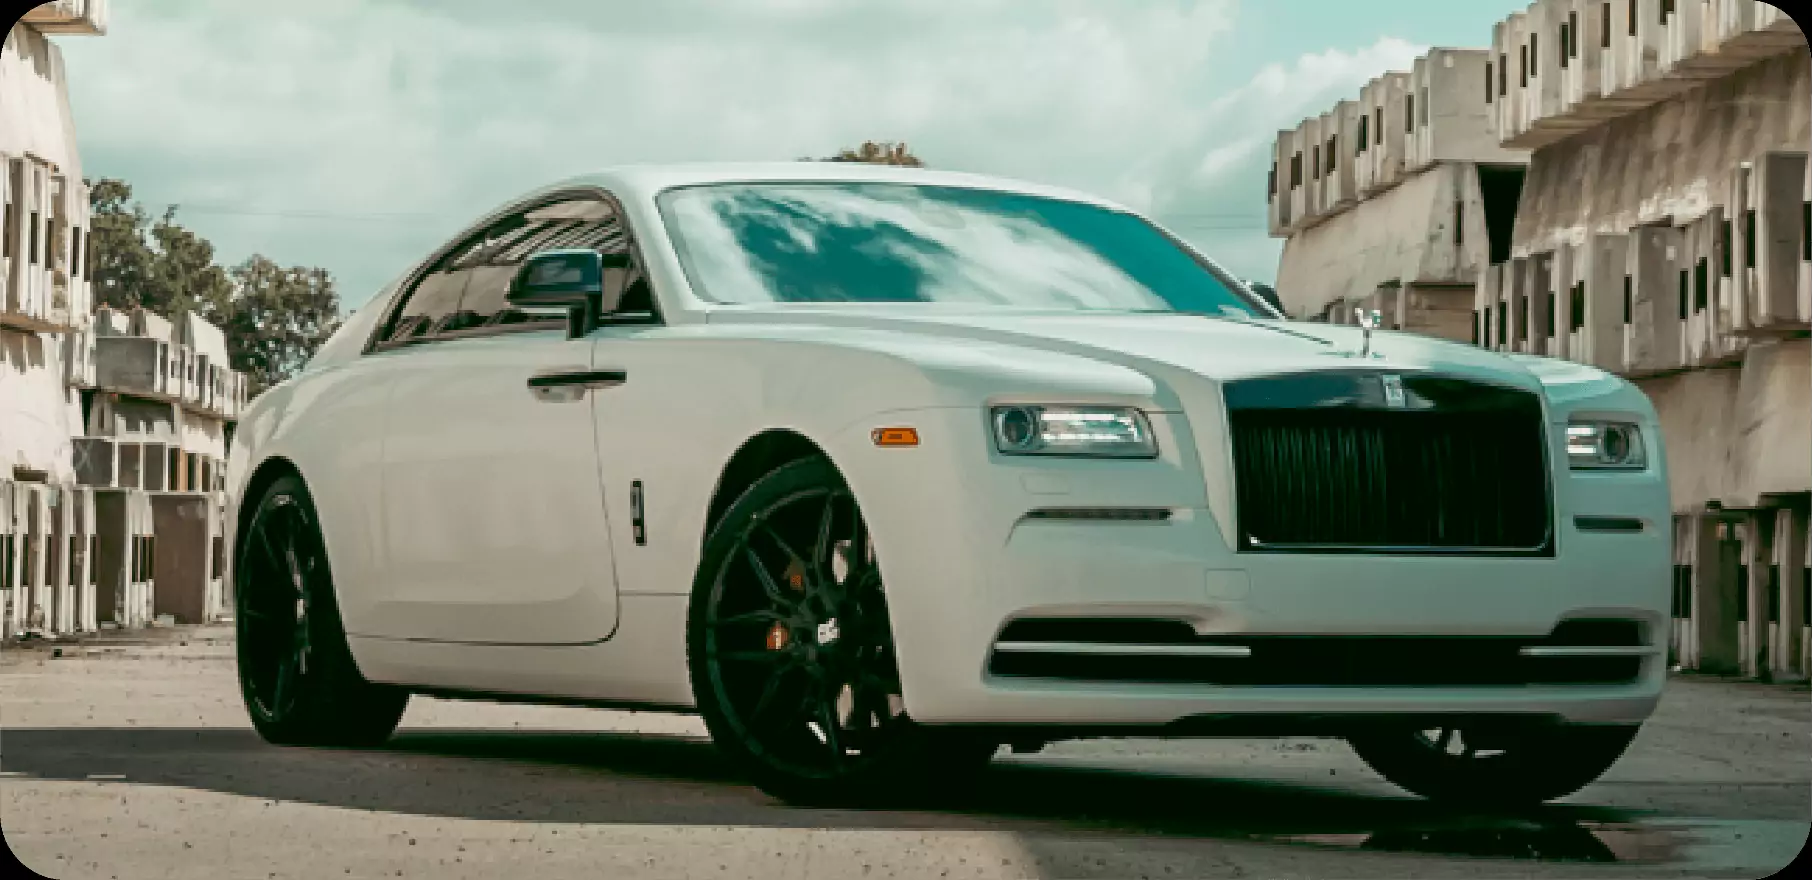 Rolls Royce Wraith for rent Houston